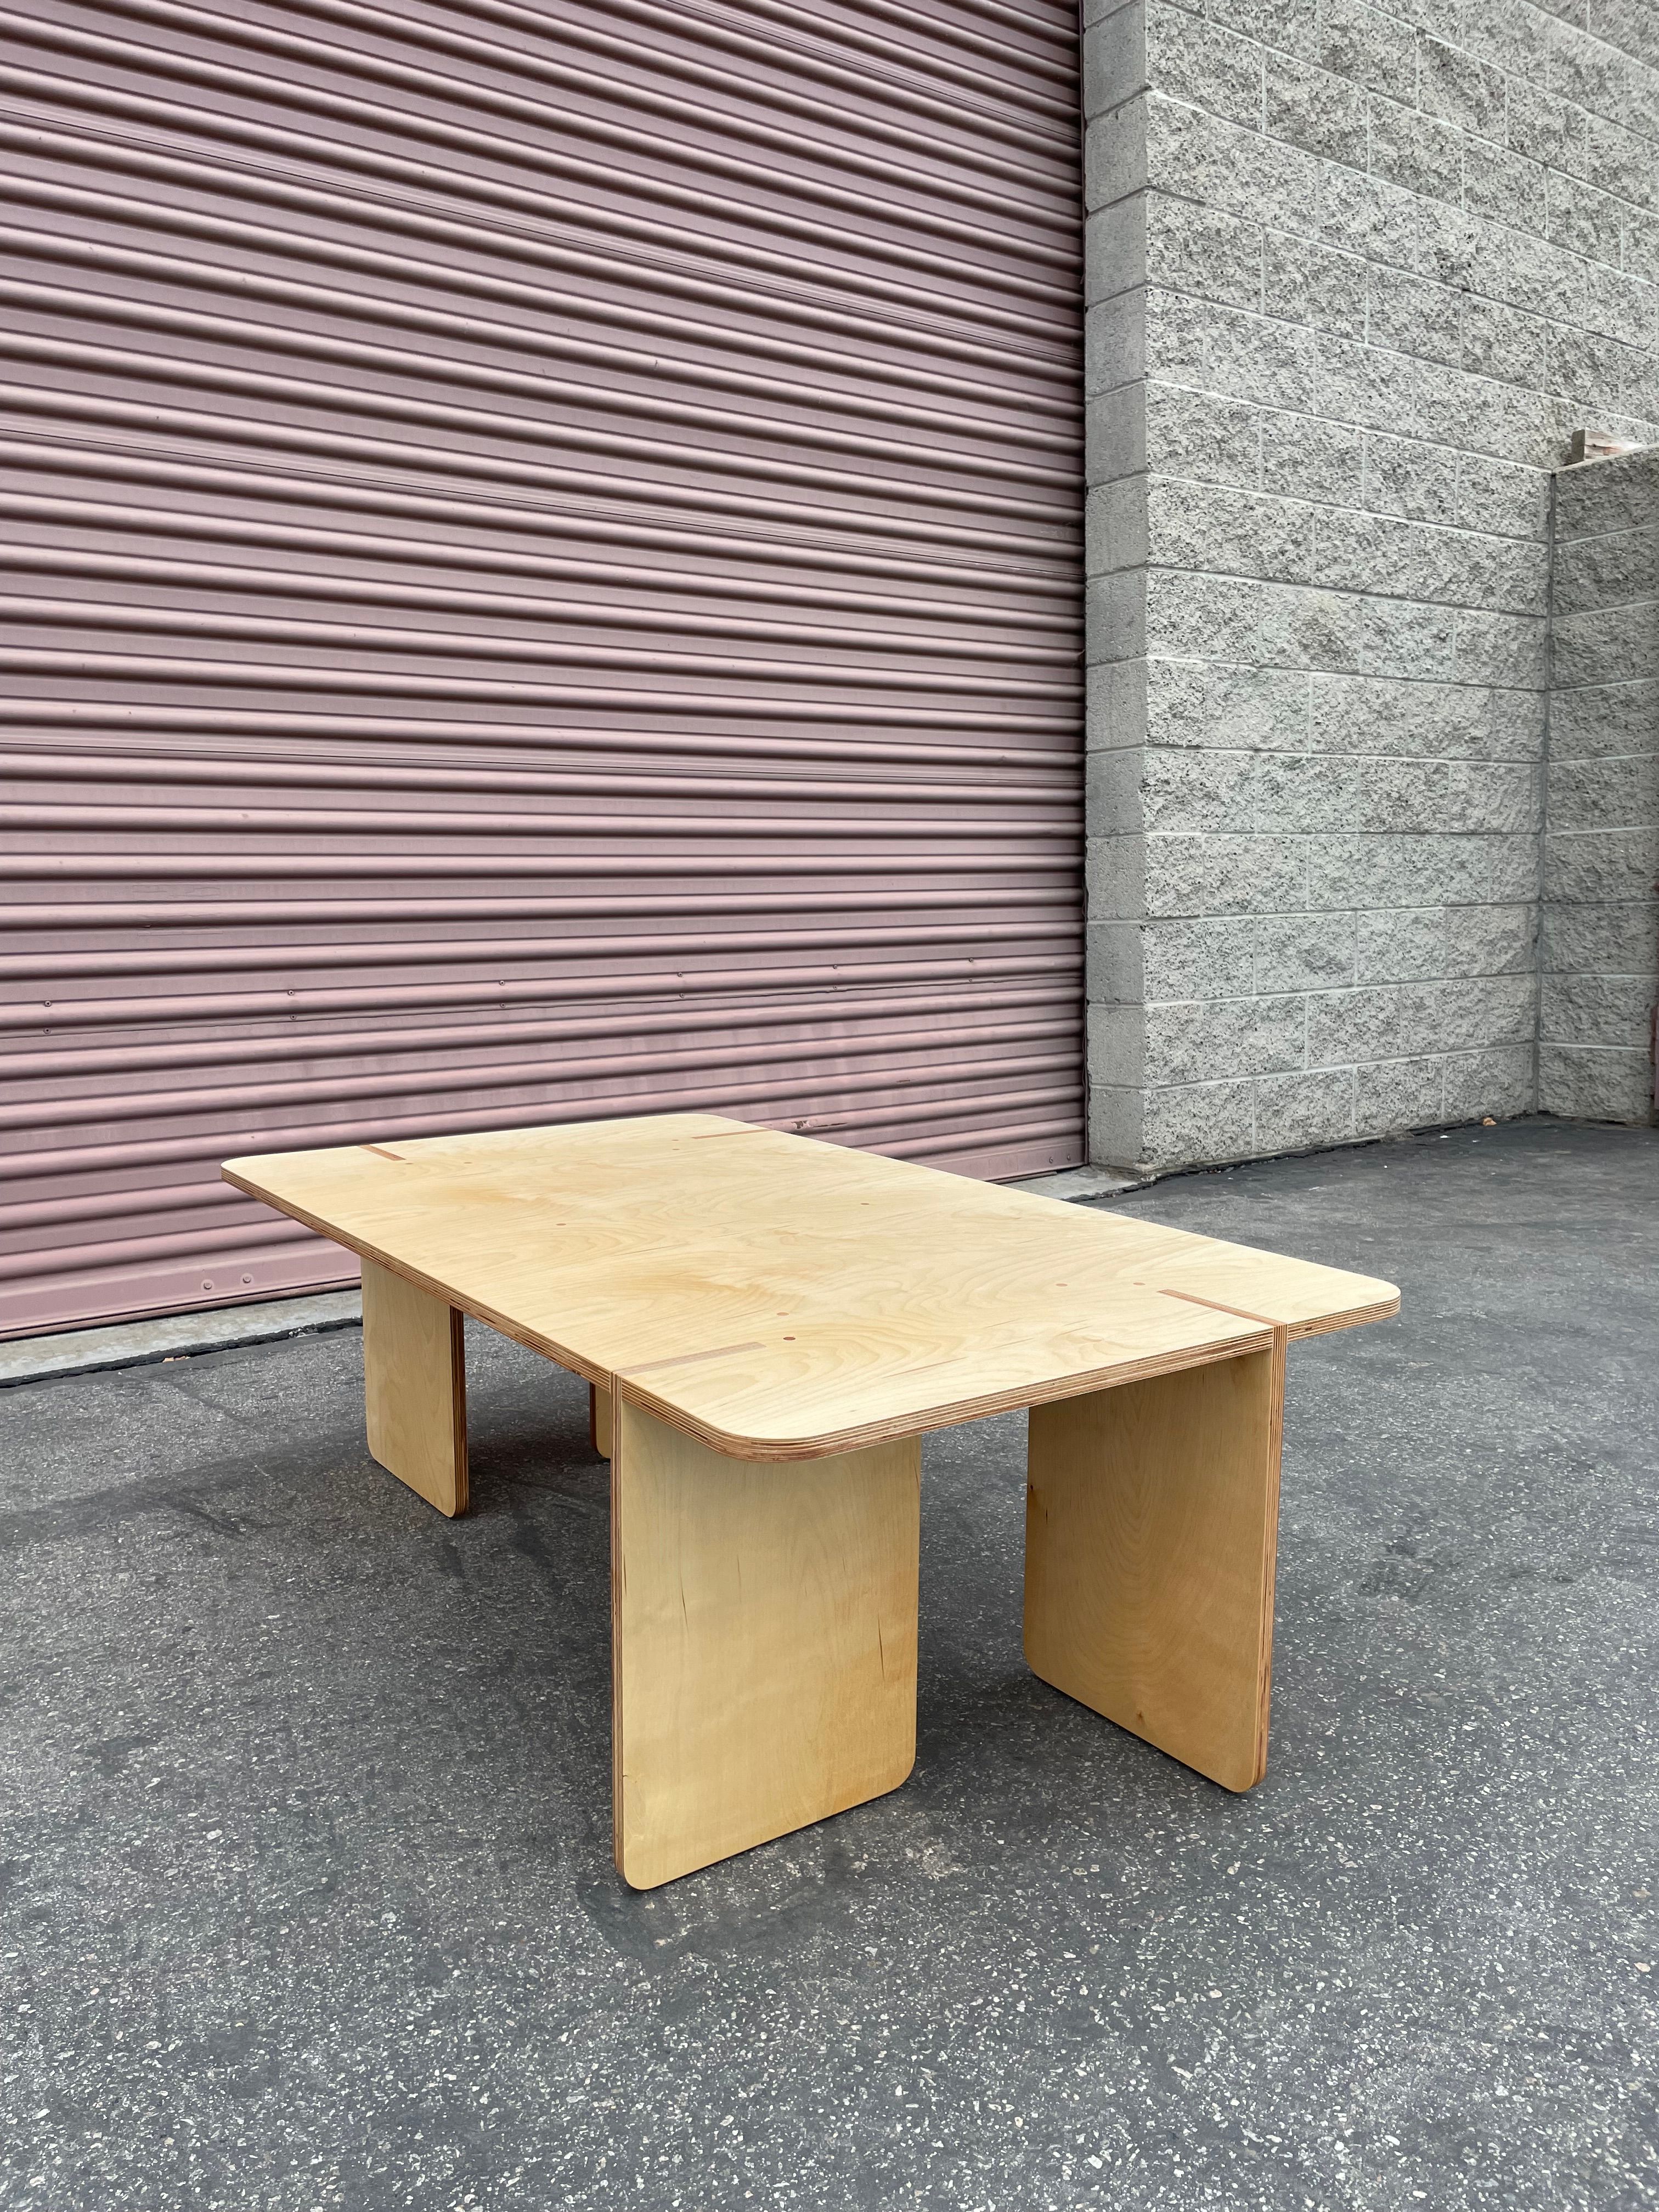  Low Rider Coffee table - Studio Keeta product image 6